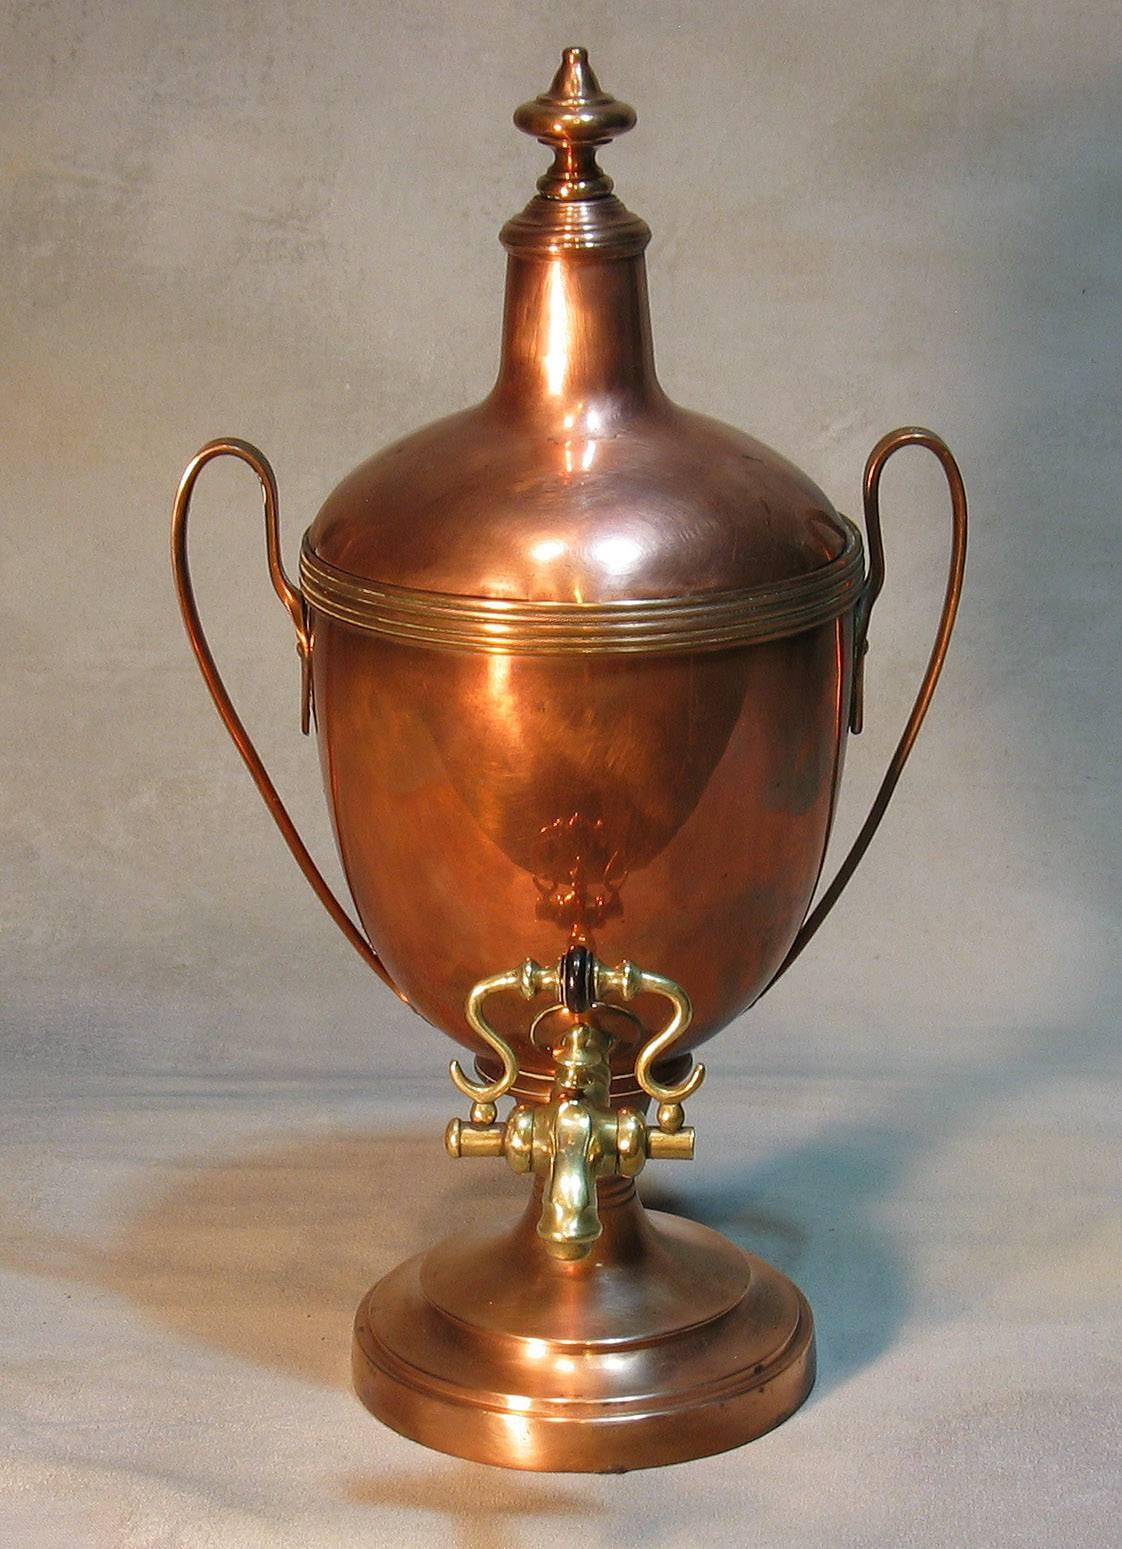 Victorian Copper Hot Water Urn, Paris Exhibition 1855 Medal Winner Design 3